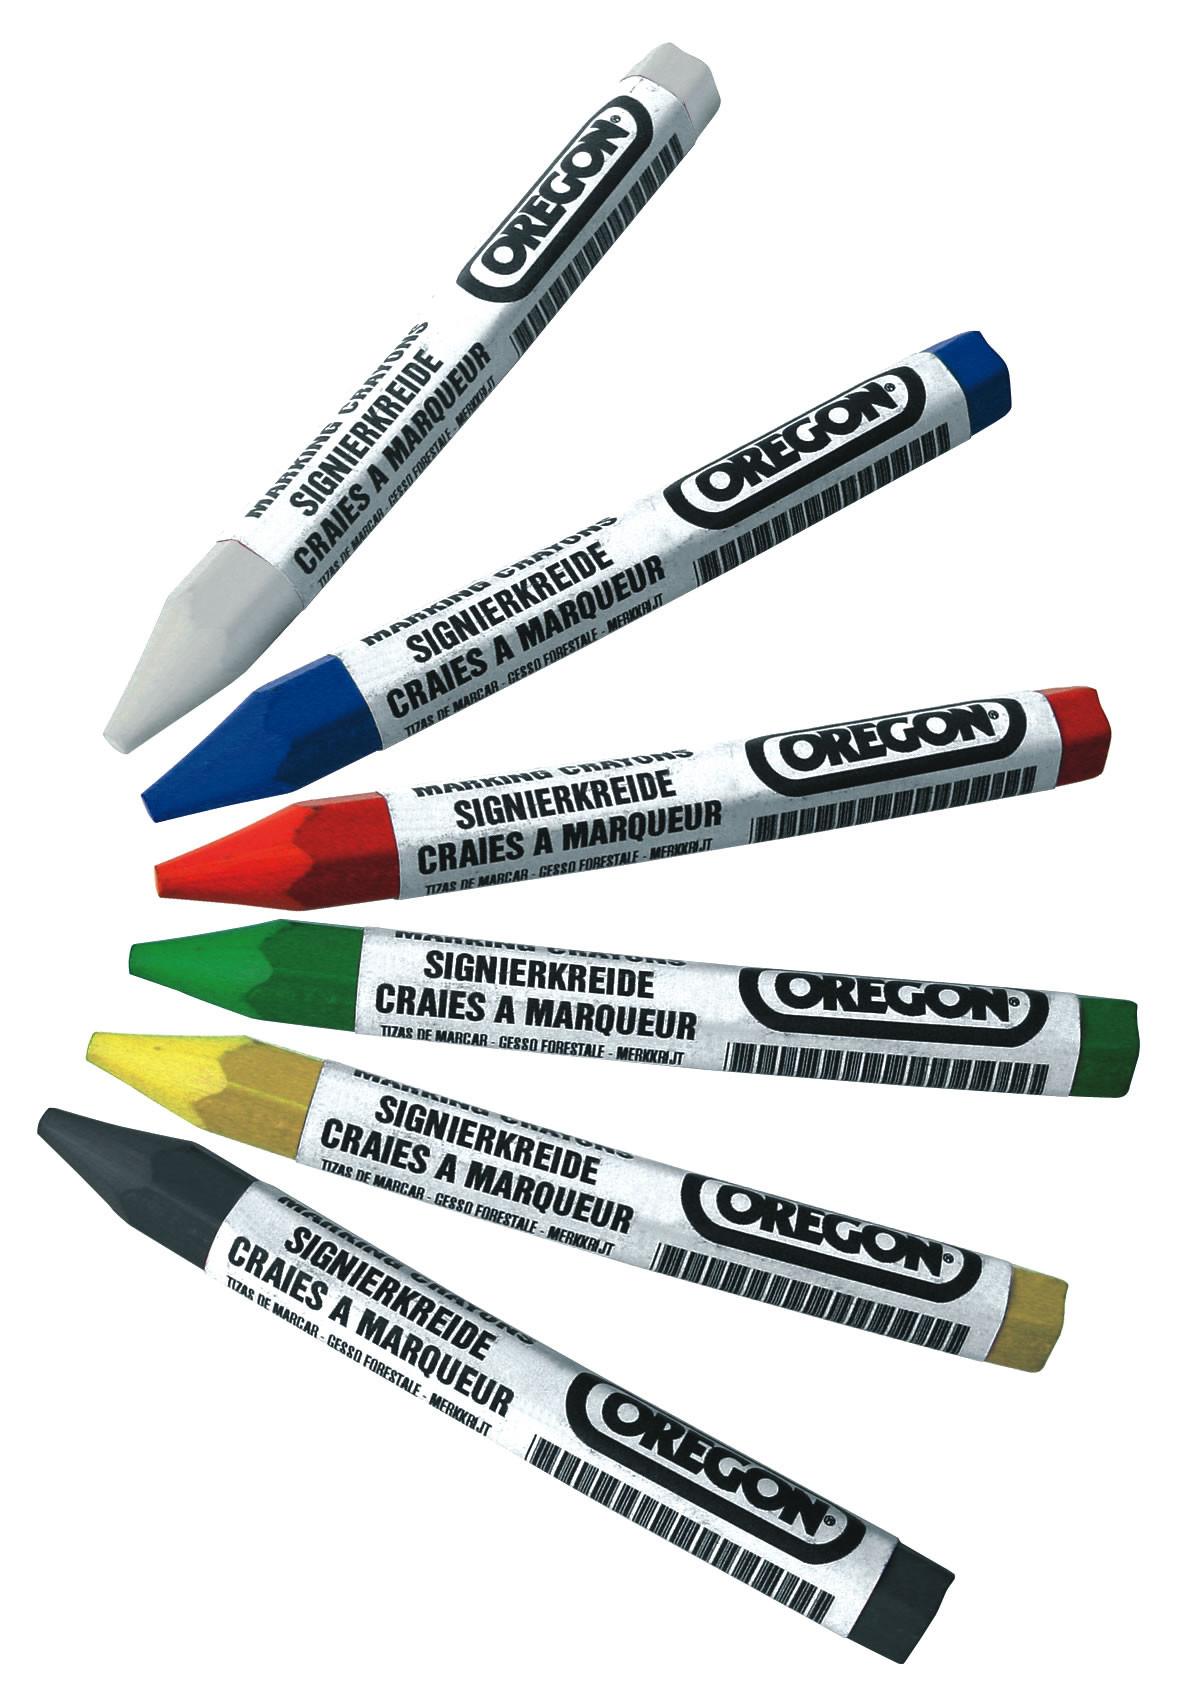 295361 - Oregon Marking Crayons - Red (12) - NewSawChains